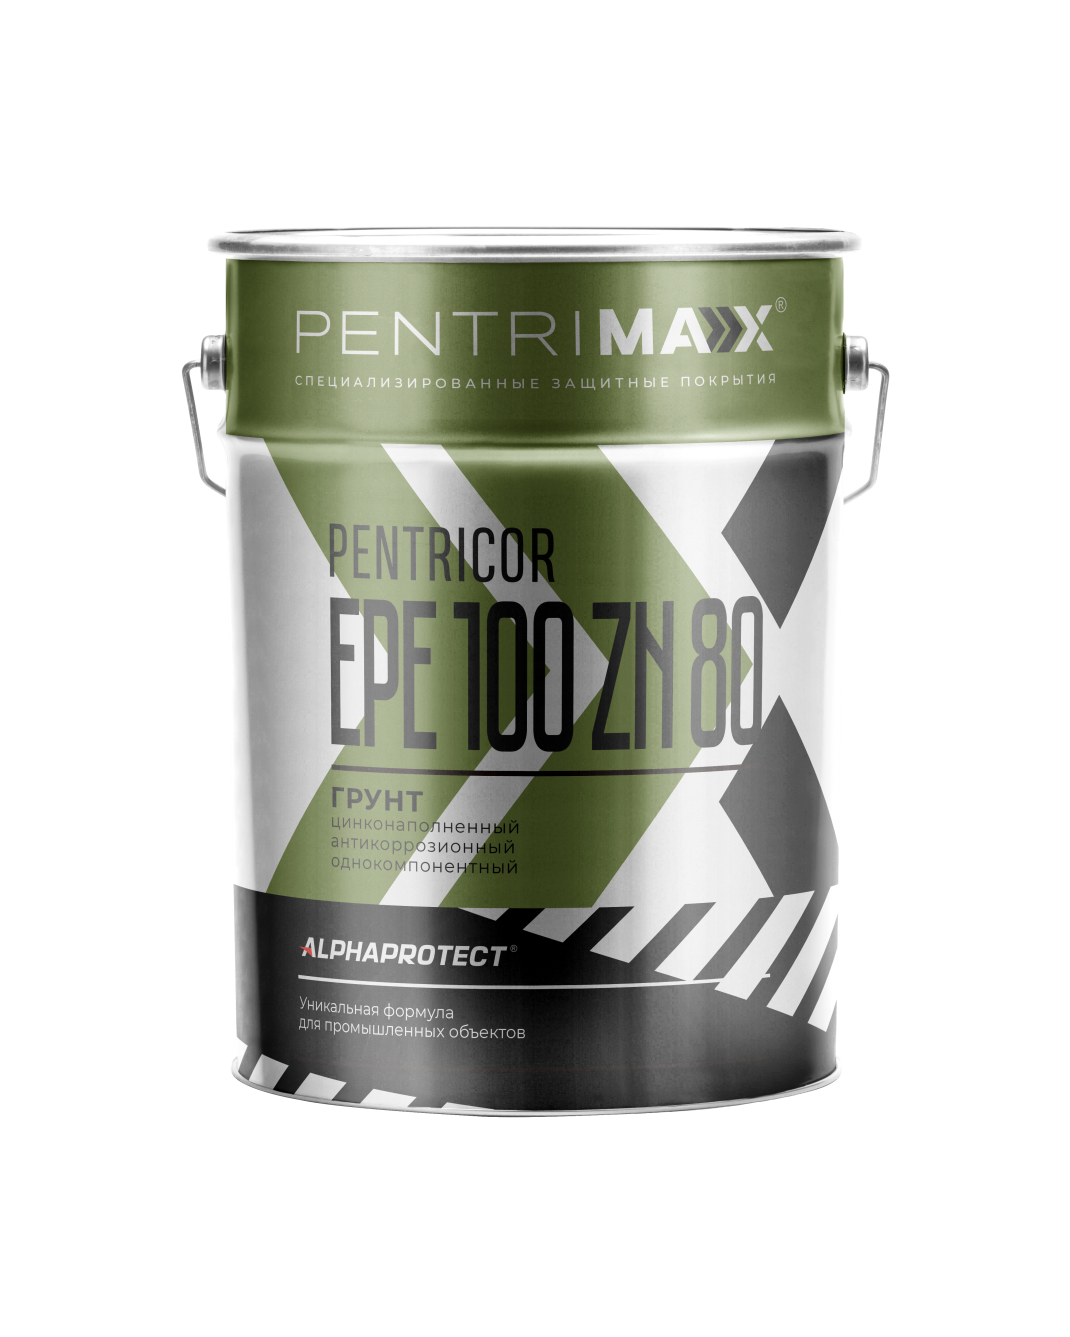 Эпоксидный грунт с цинком PENTRICOR EPE 100 Zn 80